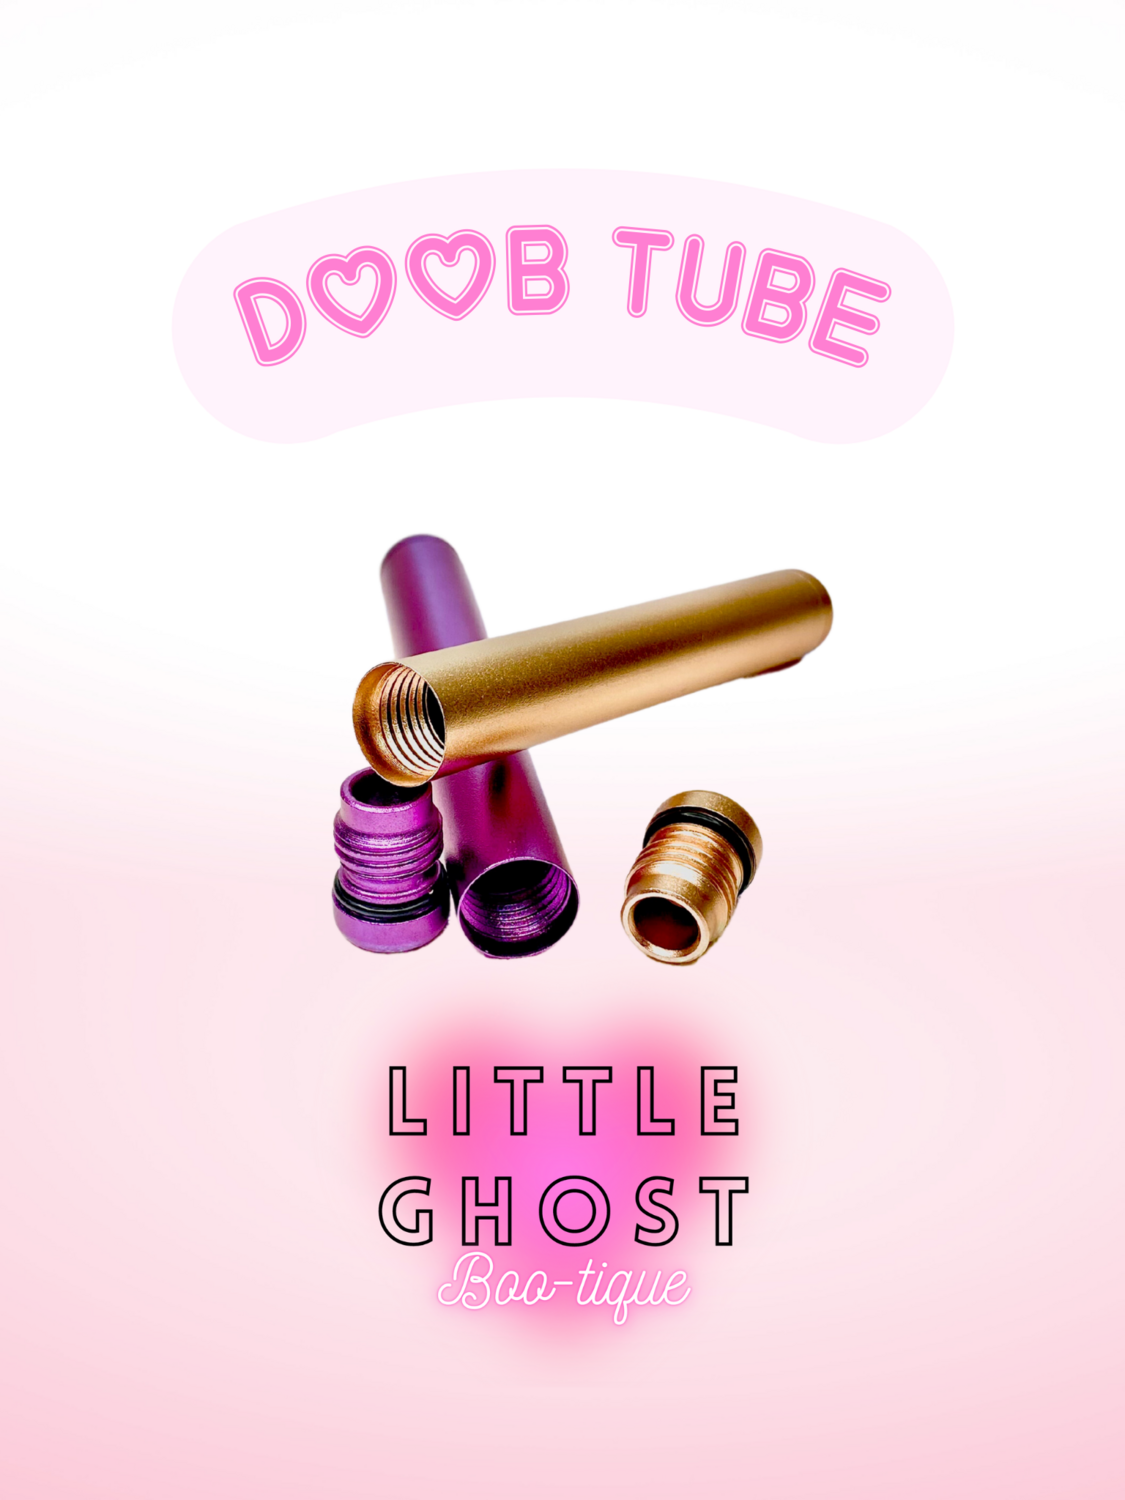 Doob Tube